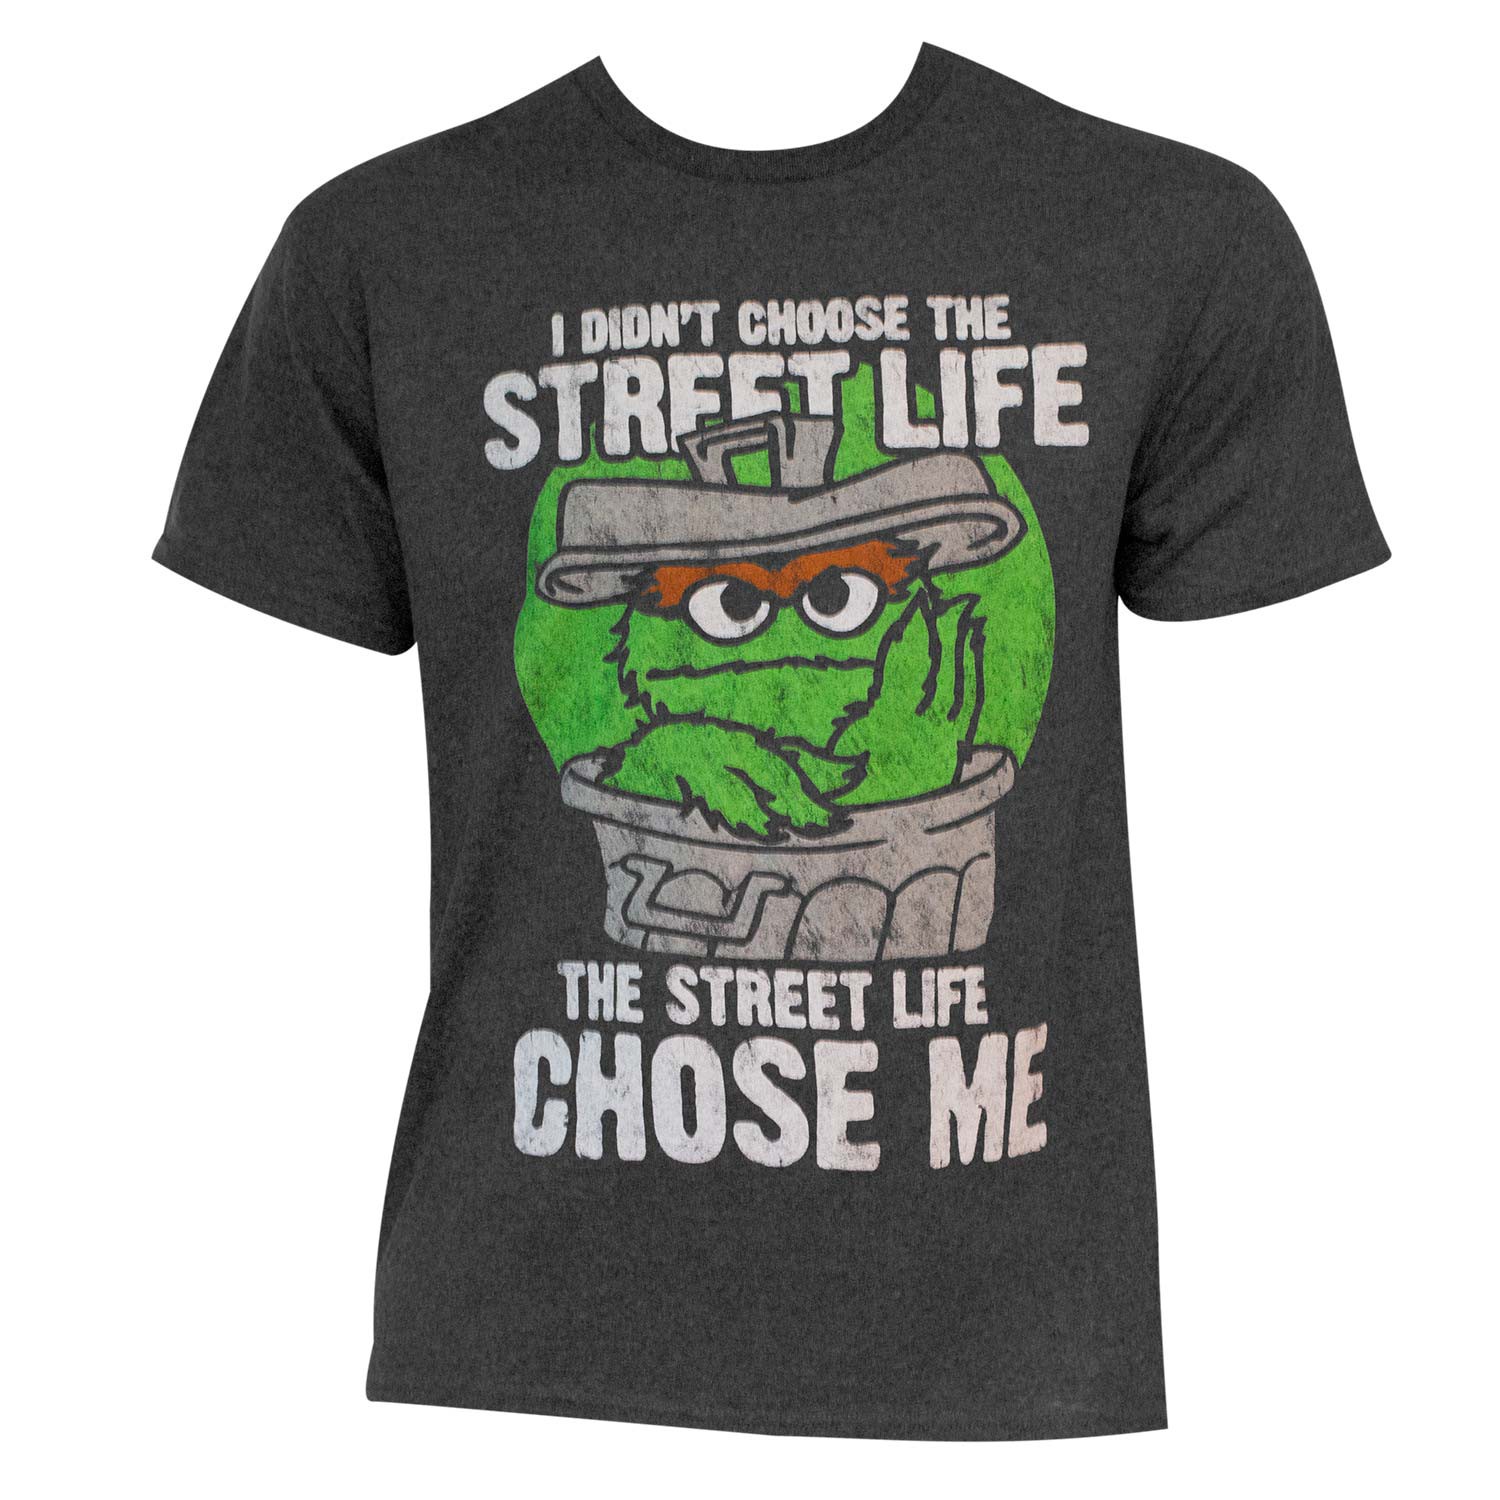 Street Life футболки. Silver Street Life Style футболка. A Life on the Streets текст.